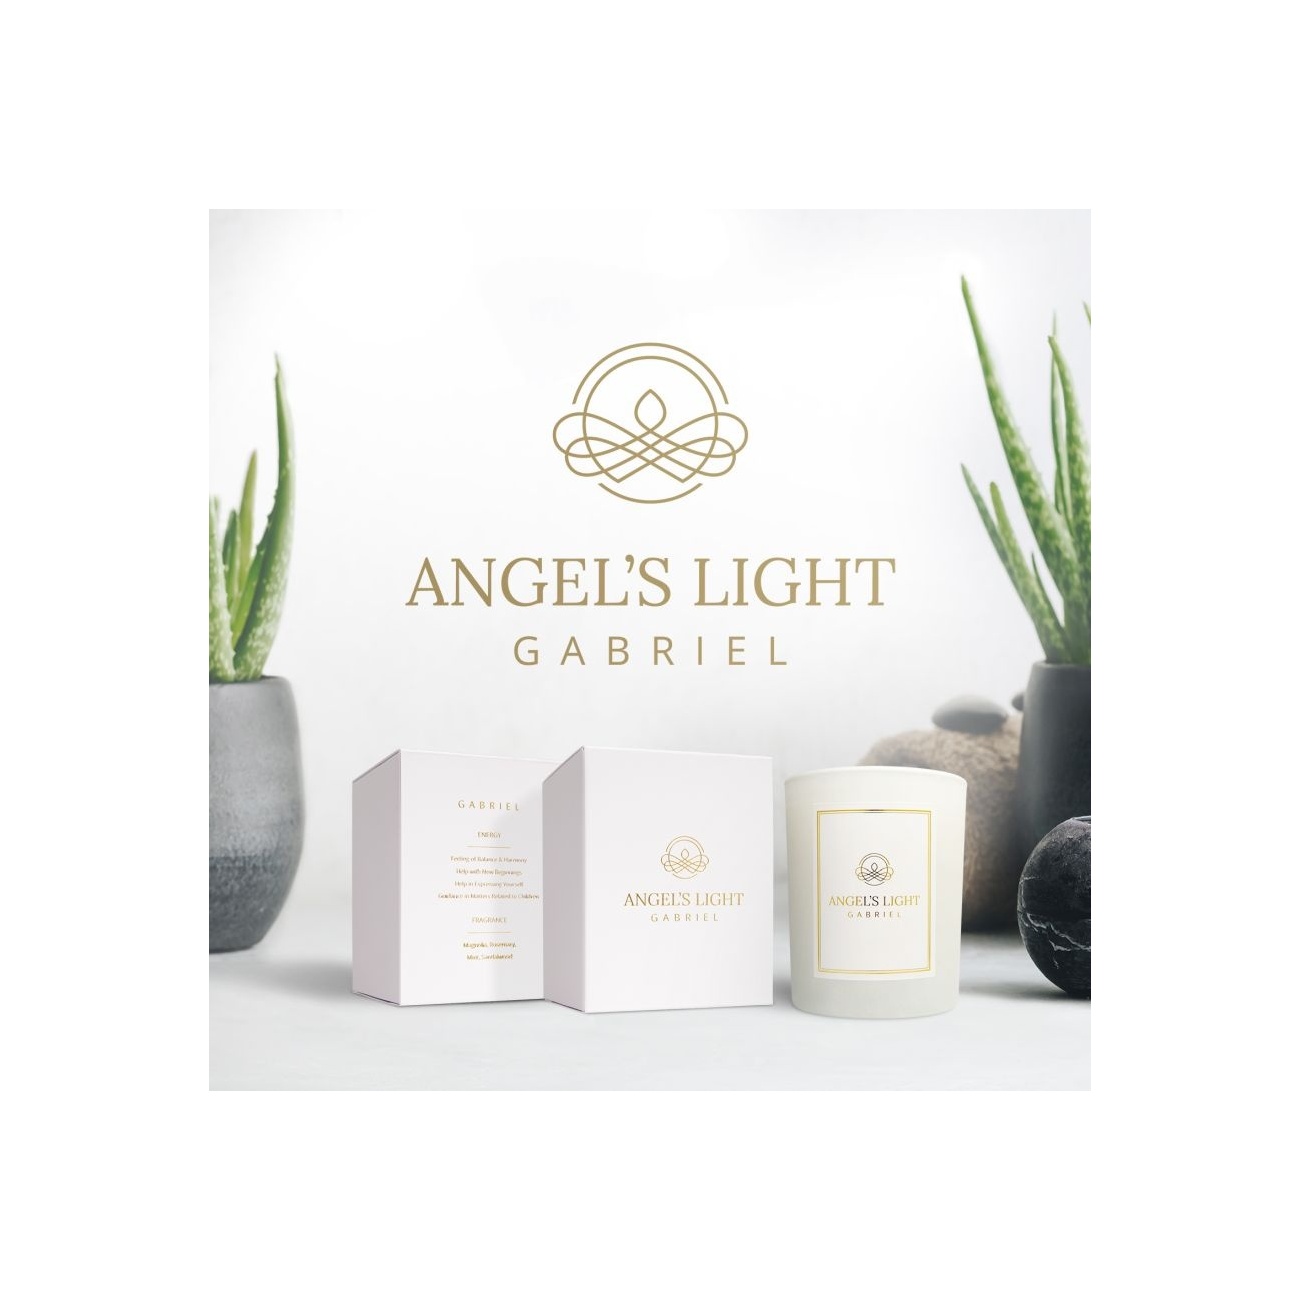 angels_light-gabriel-cotton_4_lifestyle_2